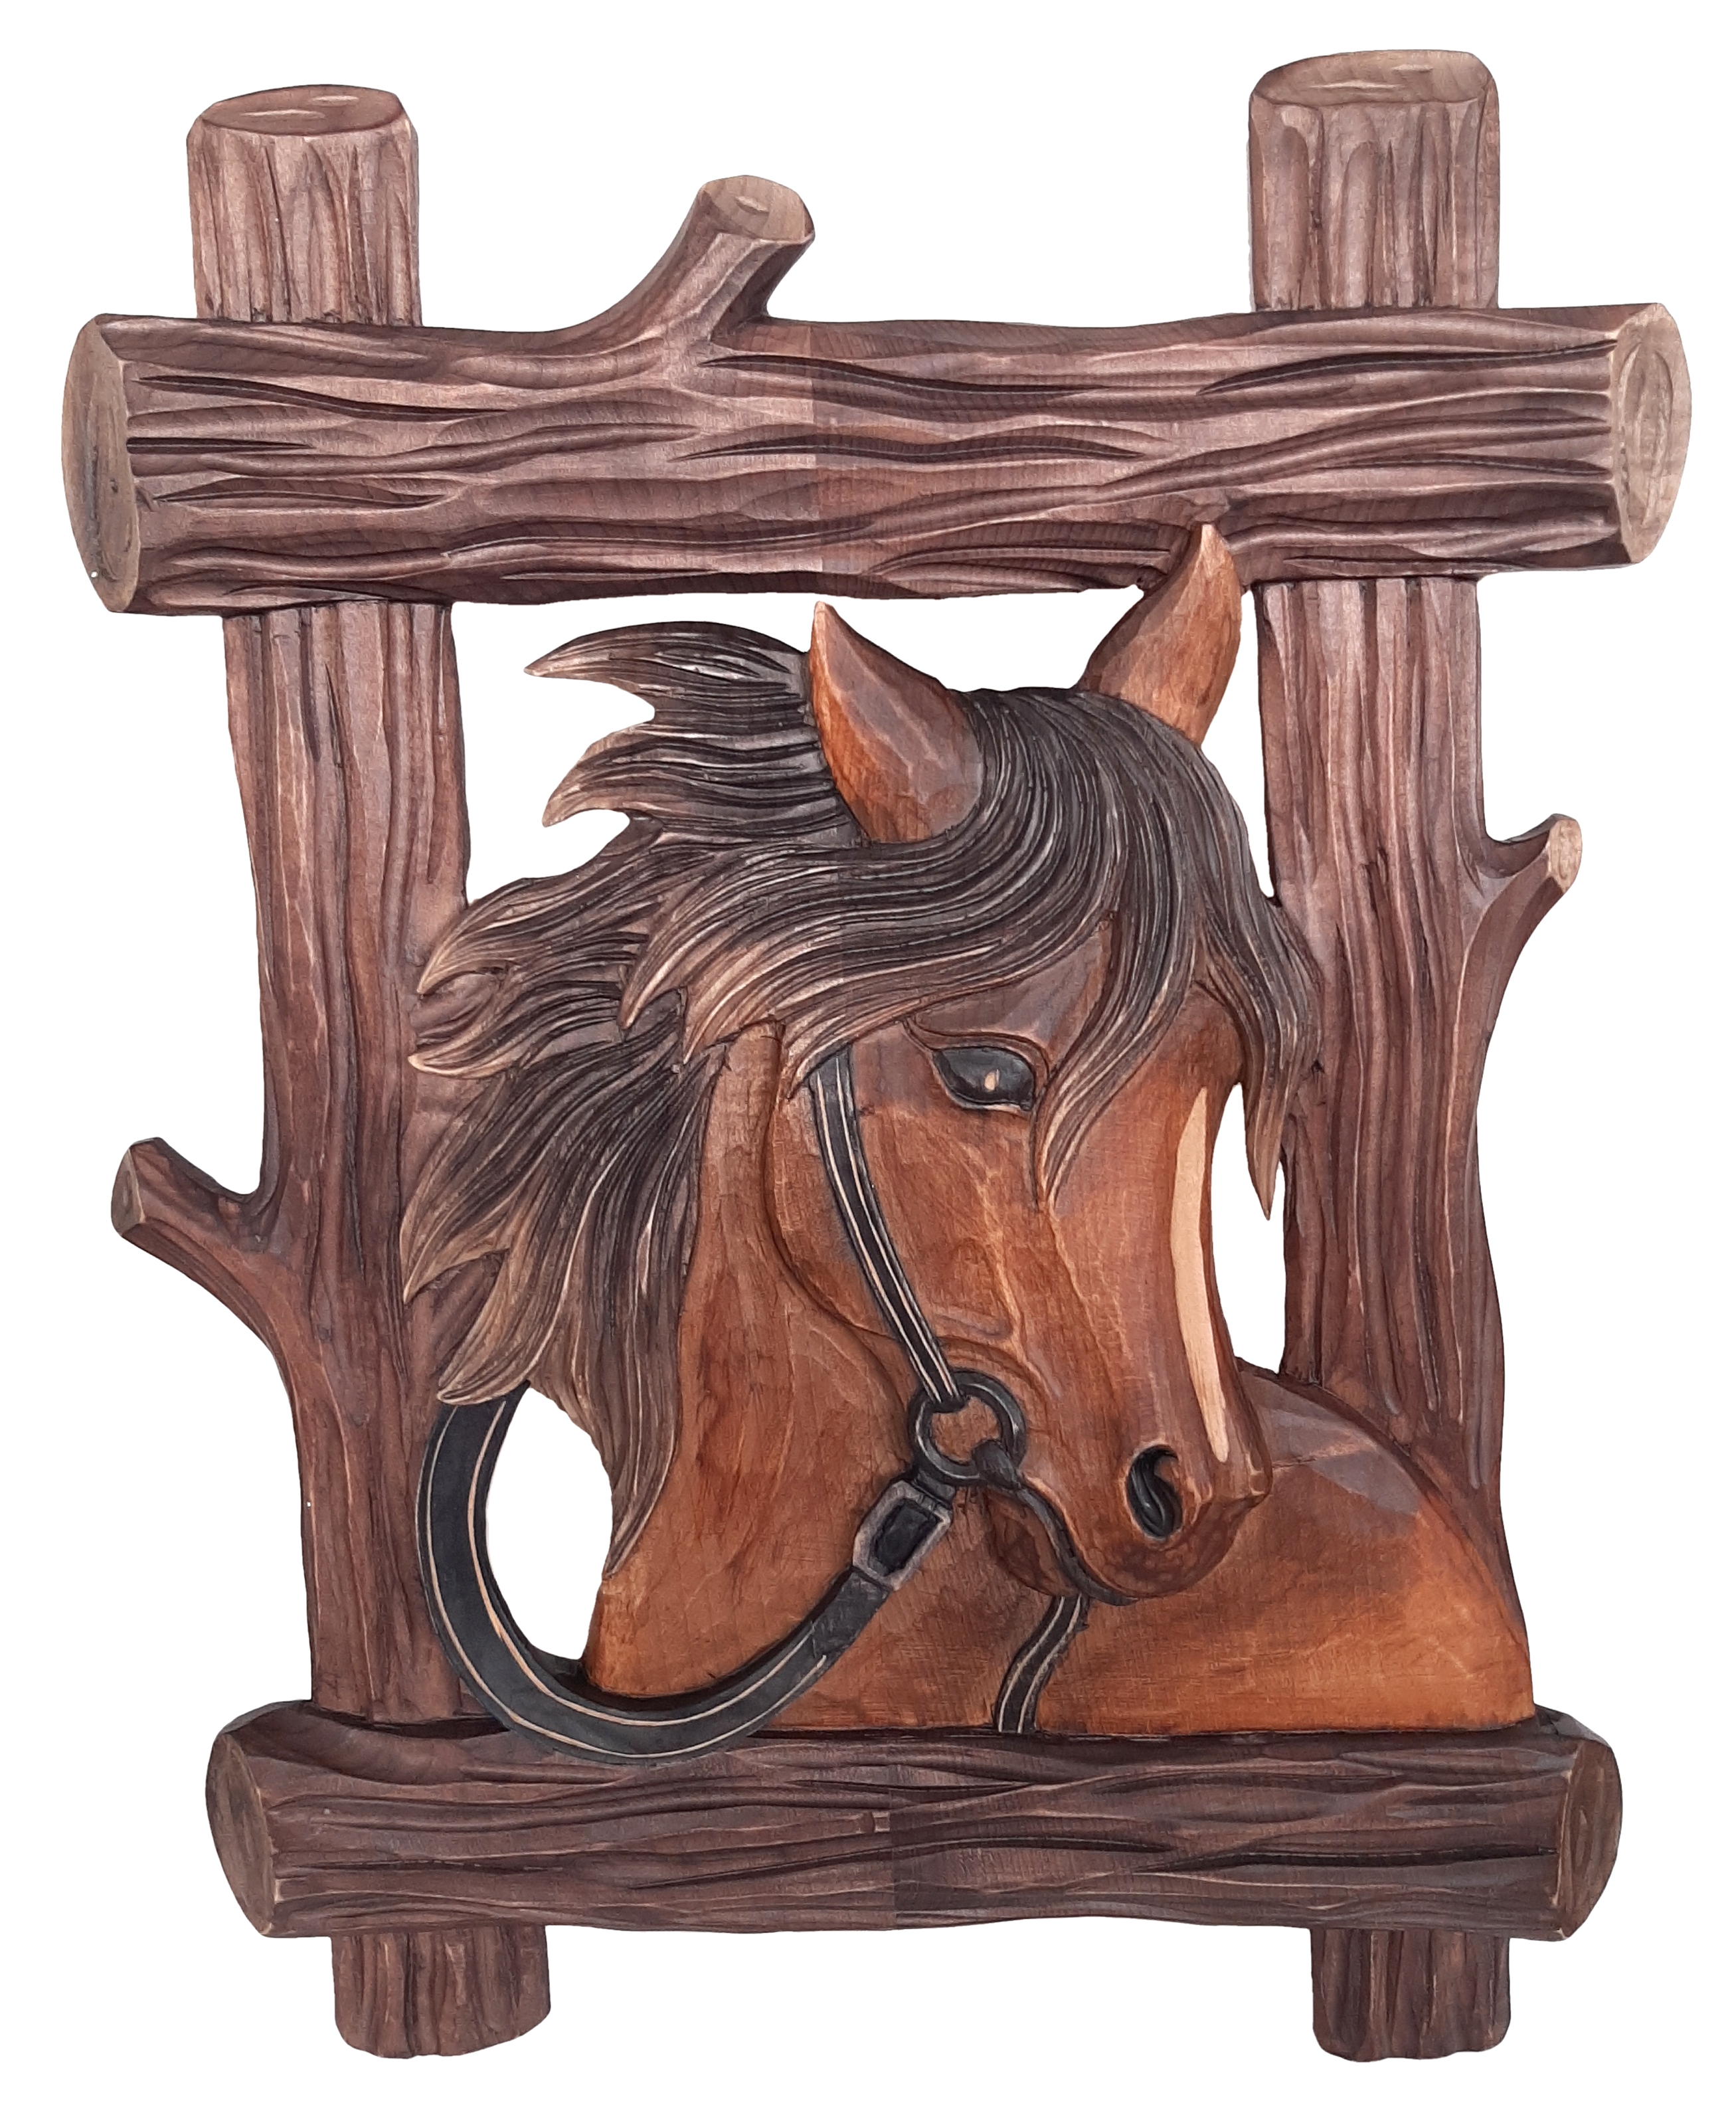 Hlava koně - obraz 51x38cm